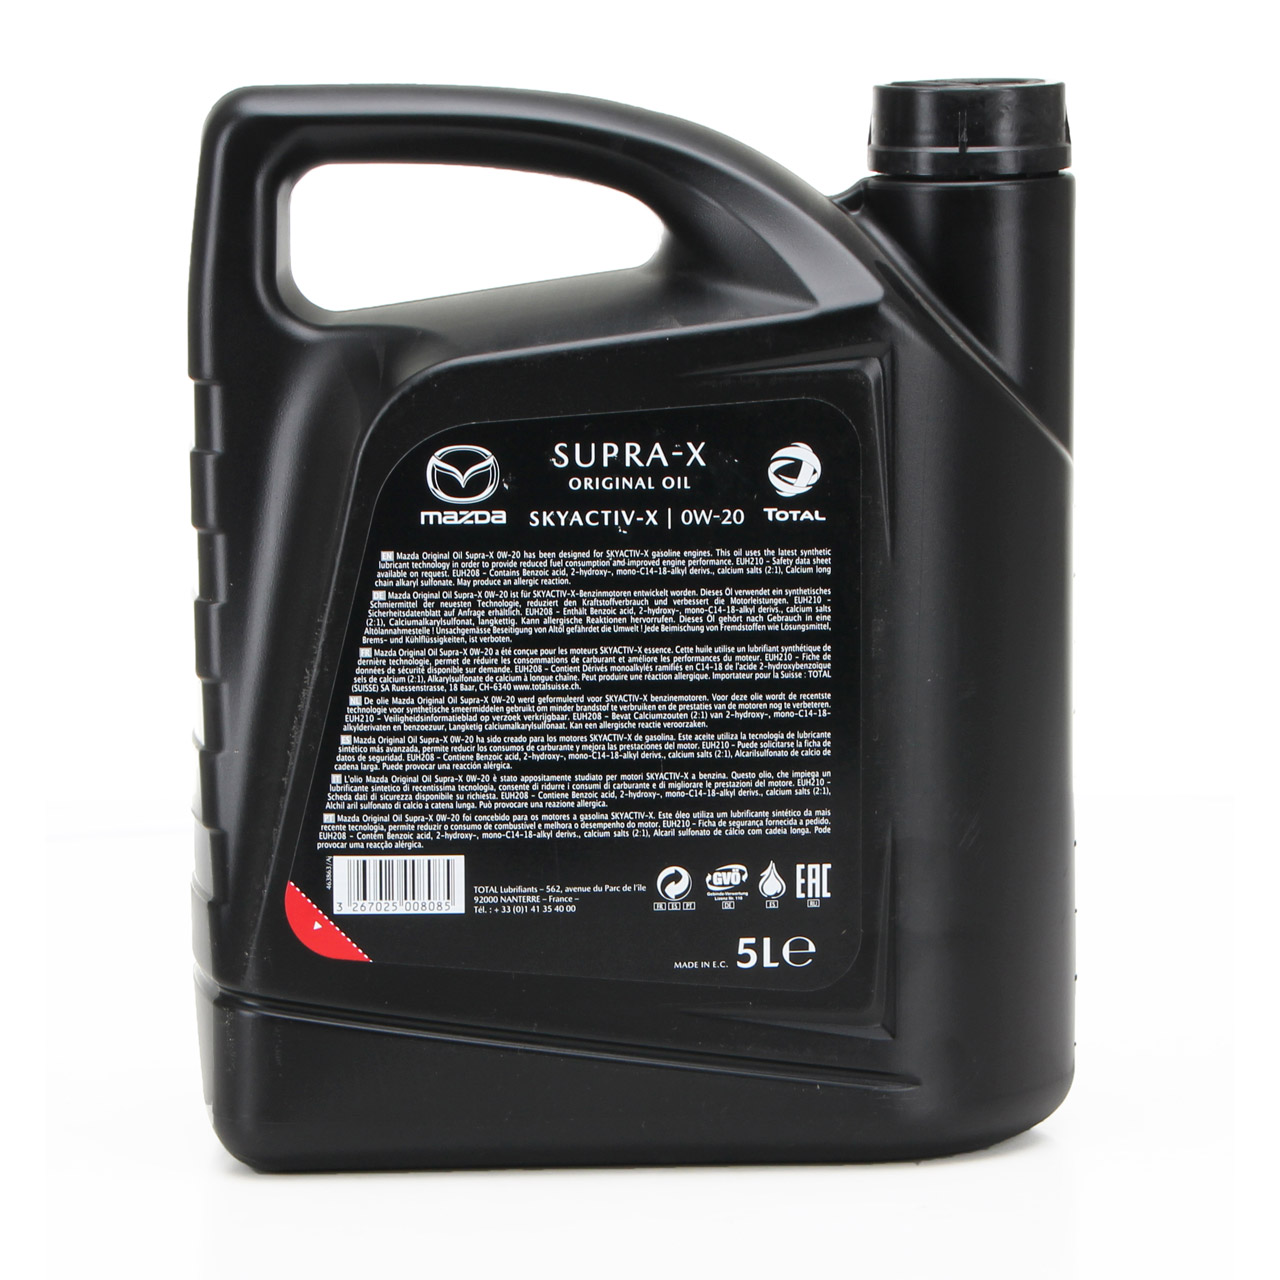 ORIGINAL Mazda Motoröl Öl Oil SUPRA-X 0W-20 0W20 BENZIN SKYACTIV-X - 5 Liter